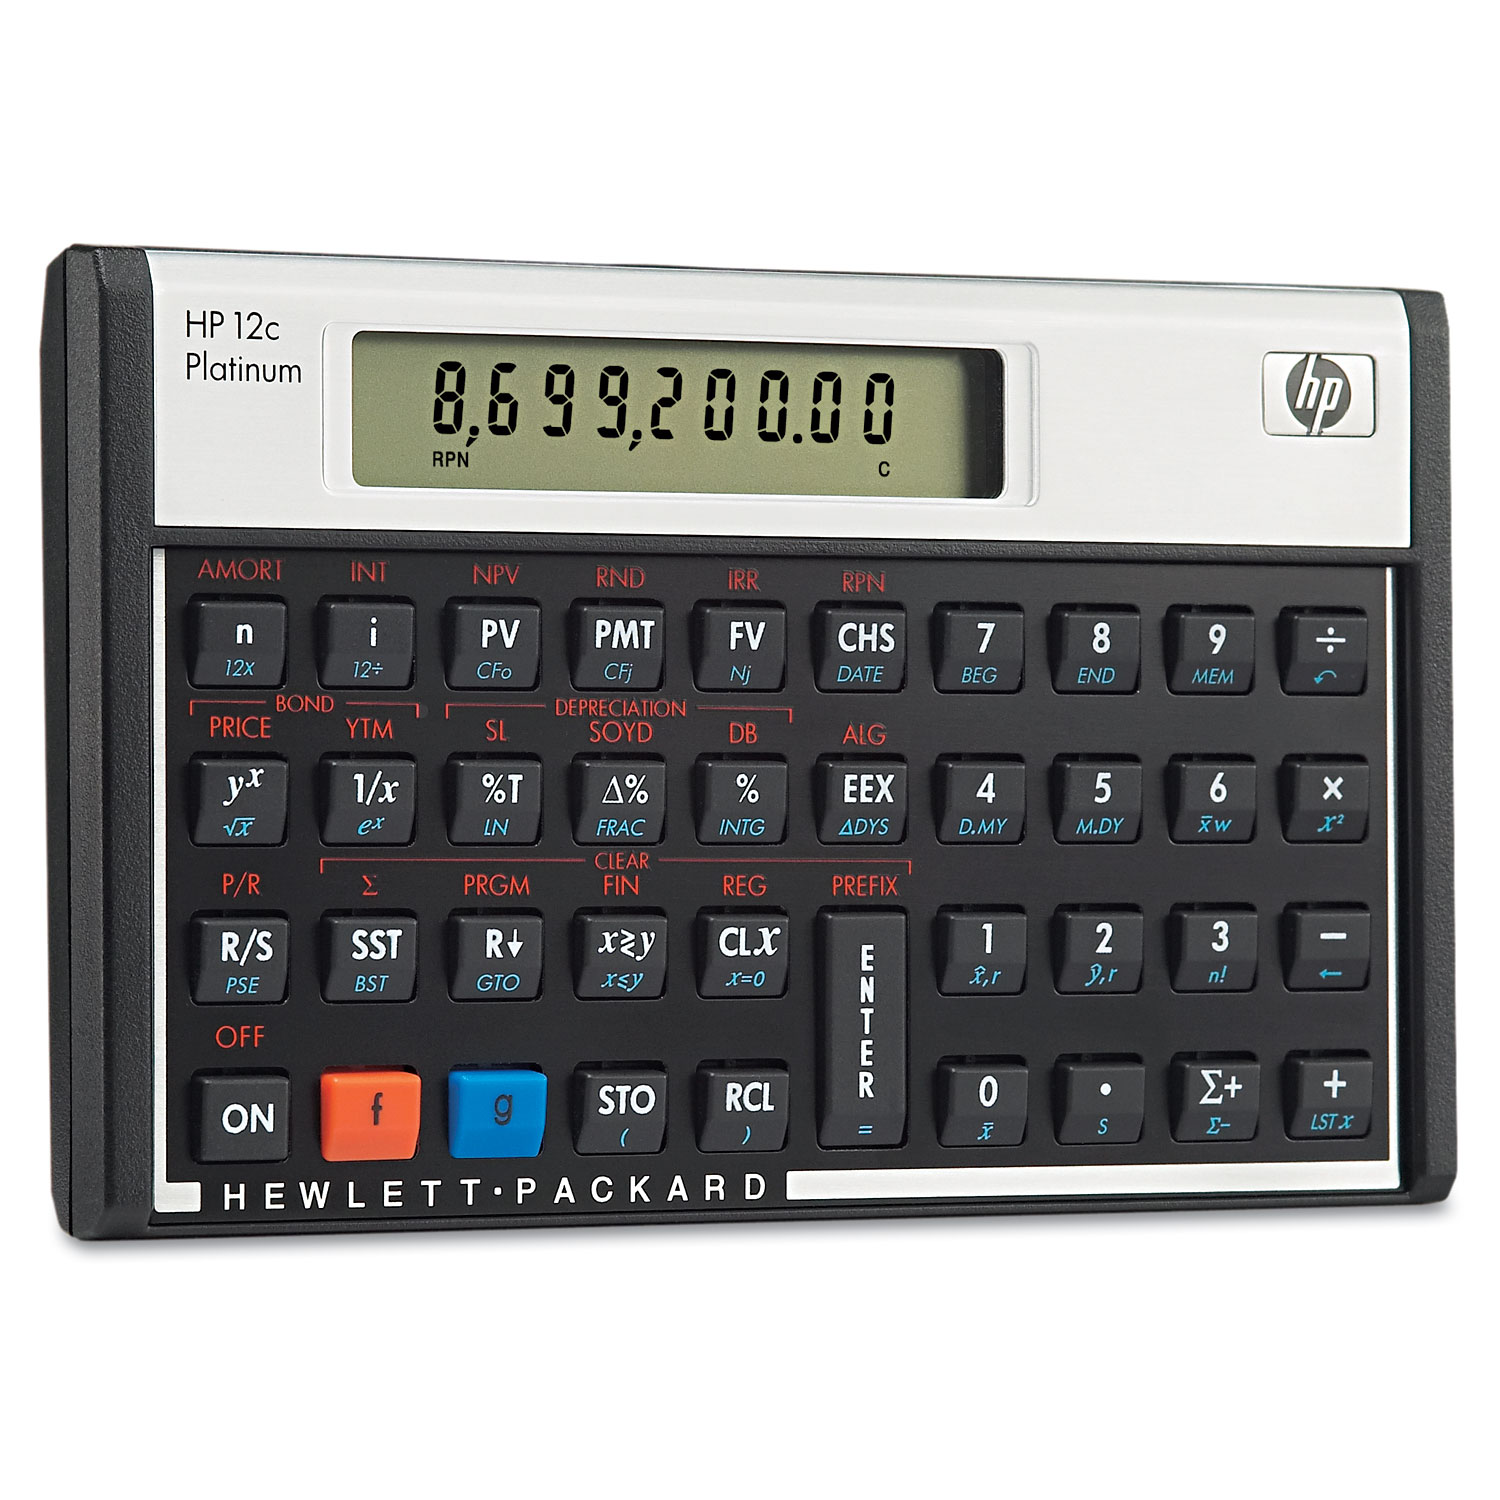 12c Platinum Financial Calculator, 10-Digit LCD